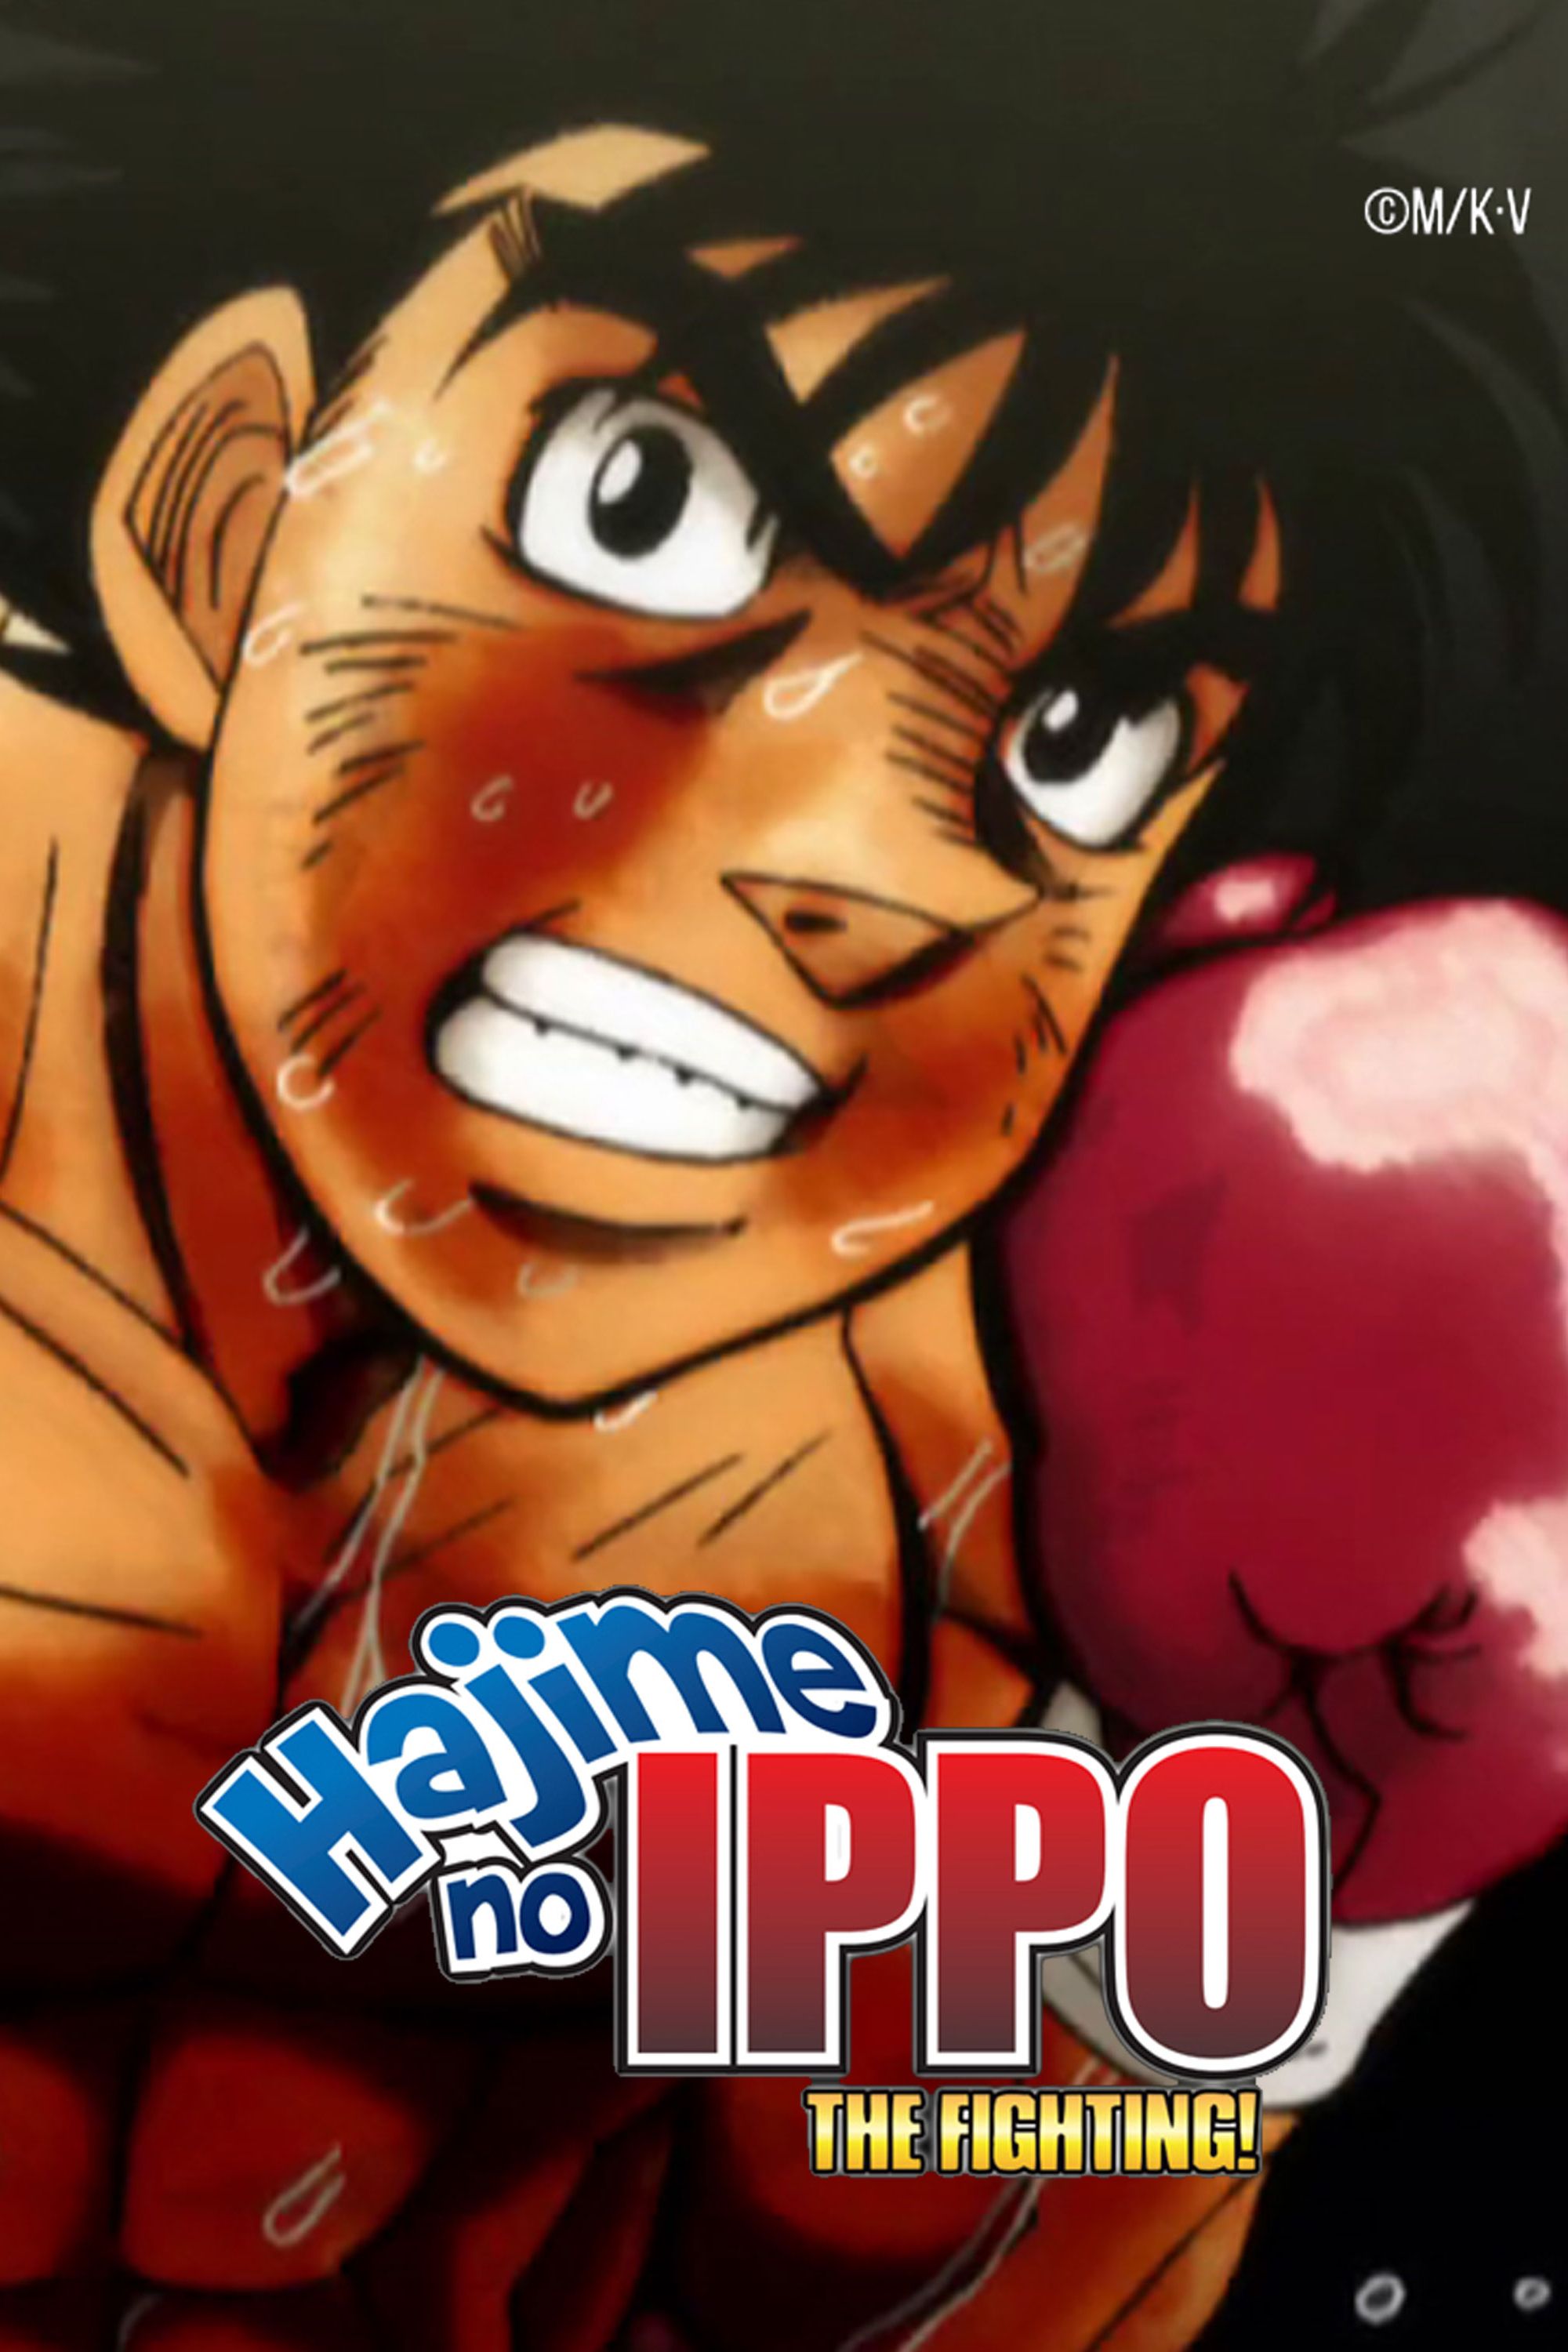 Watch Hajime no Ippo season 1 episode 1 streaming online